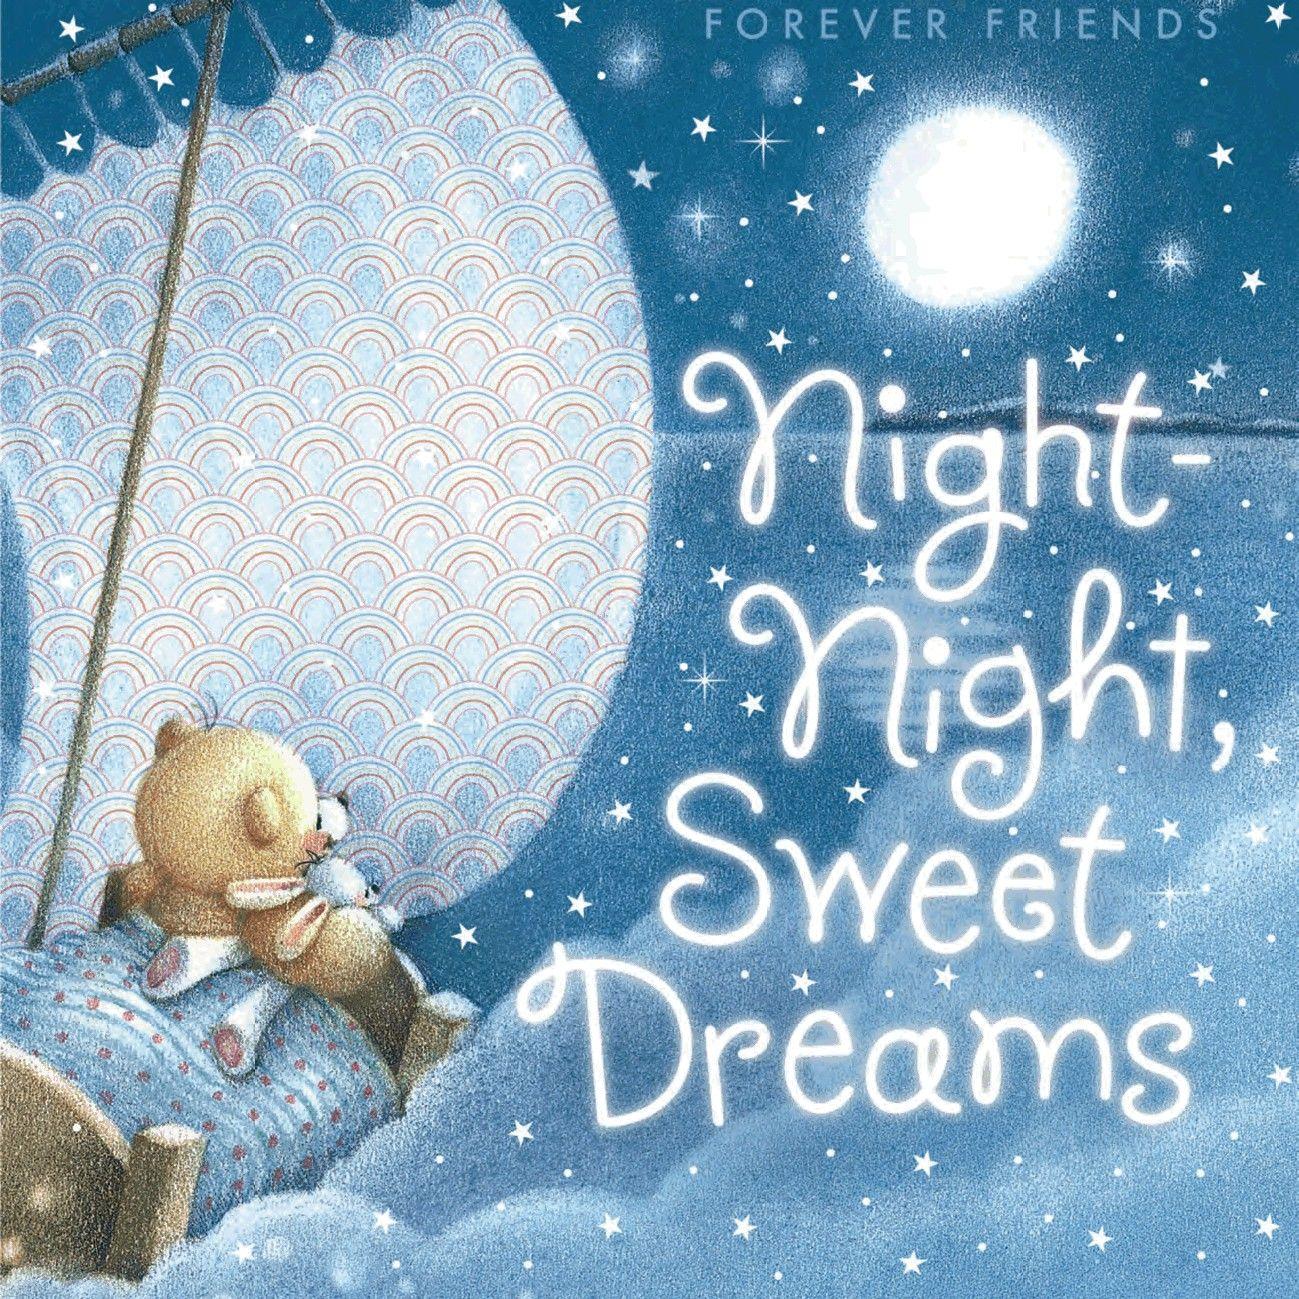 gud night sweet dreams wallpaper